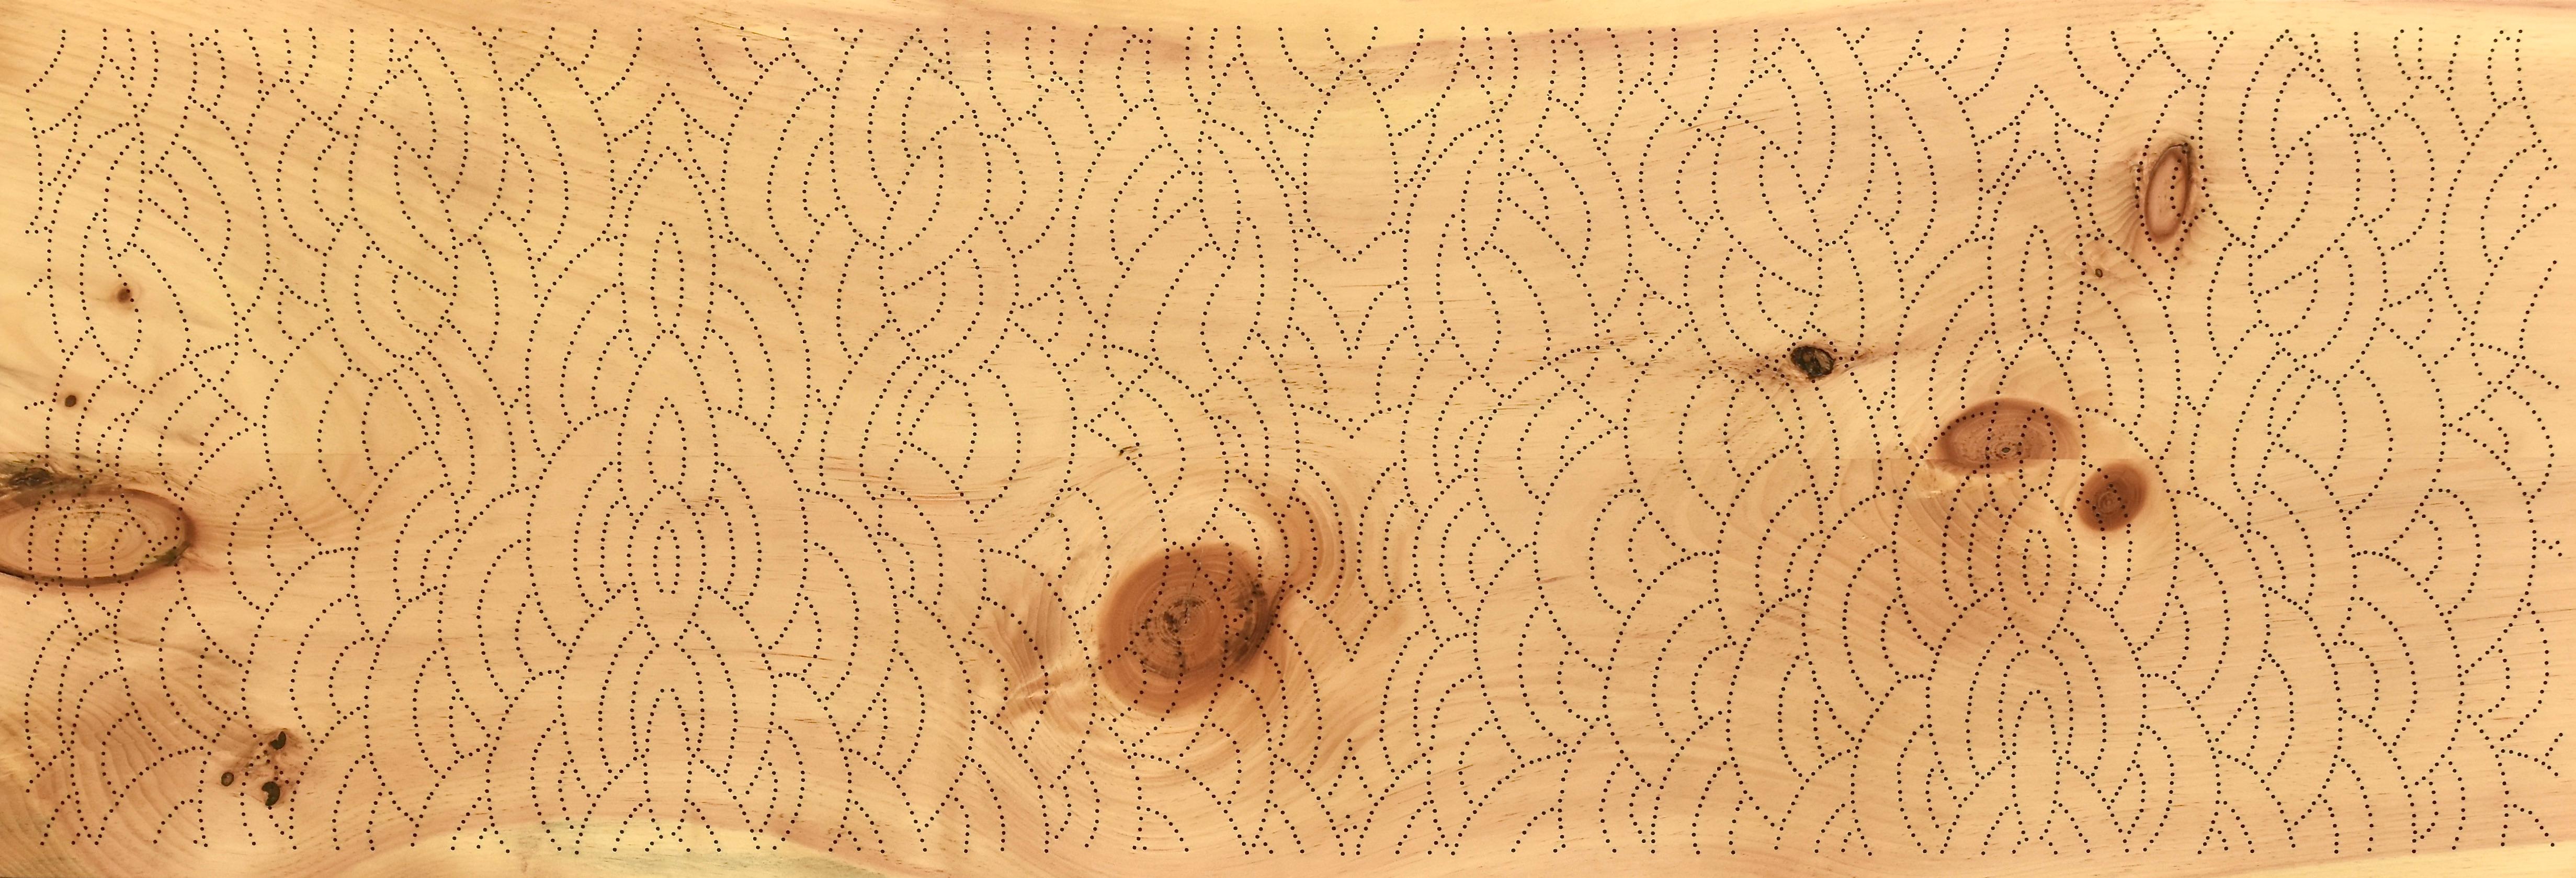 Nail Inlay Wall Piece No. 10 (total material cost $7.51)   #2 pine, pvc